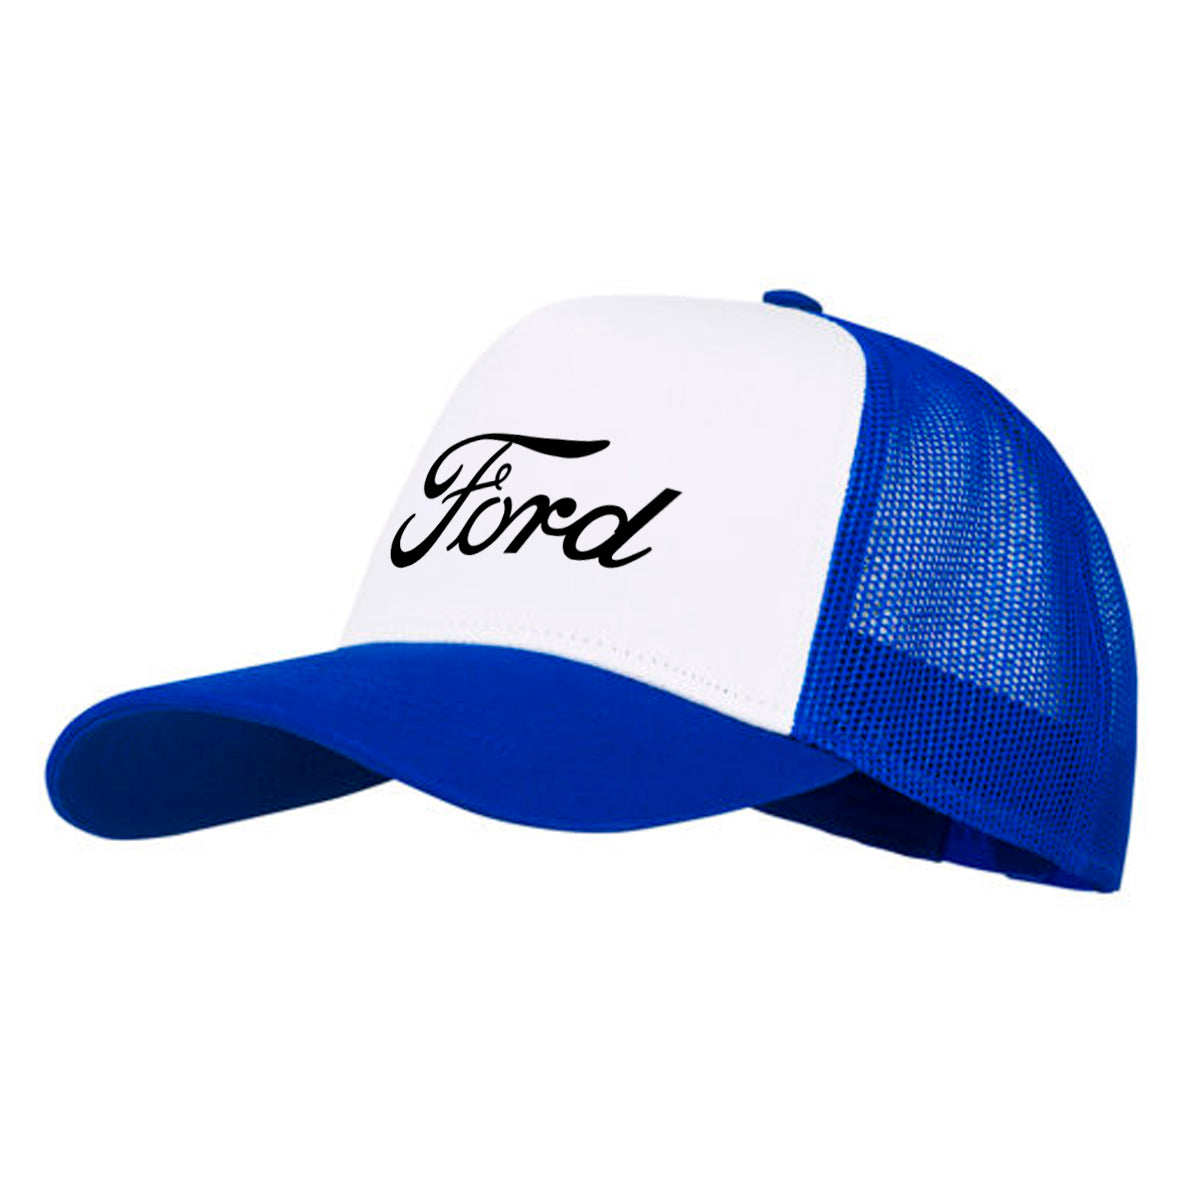 Ford Classic Trucker Caps